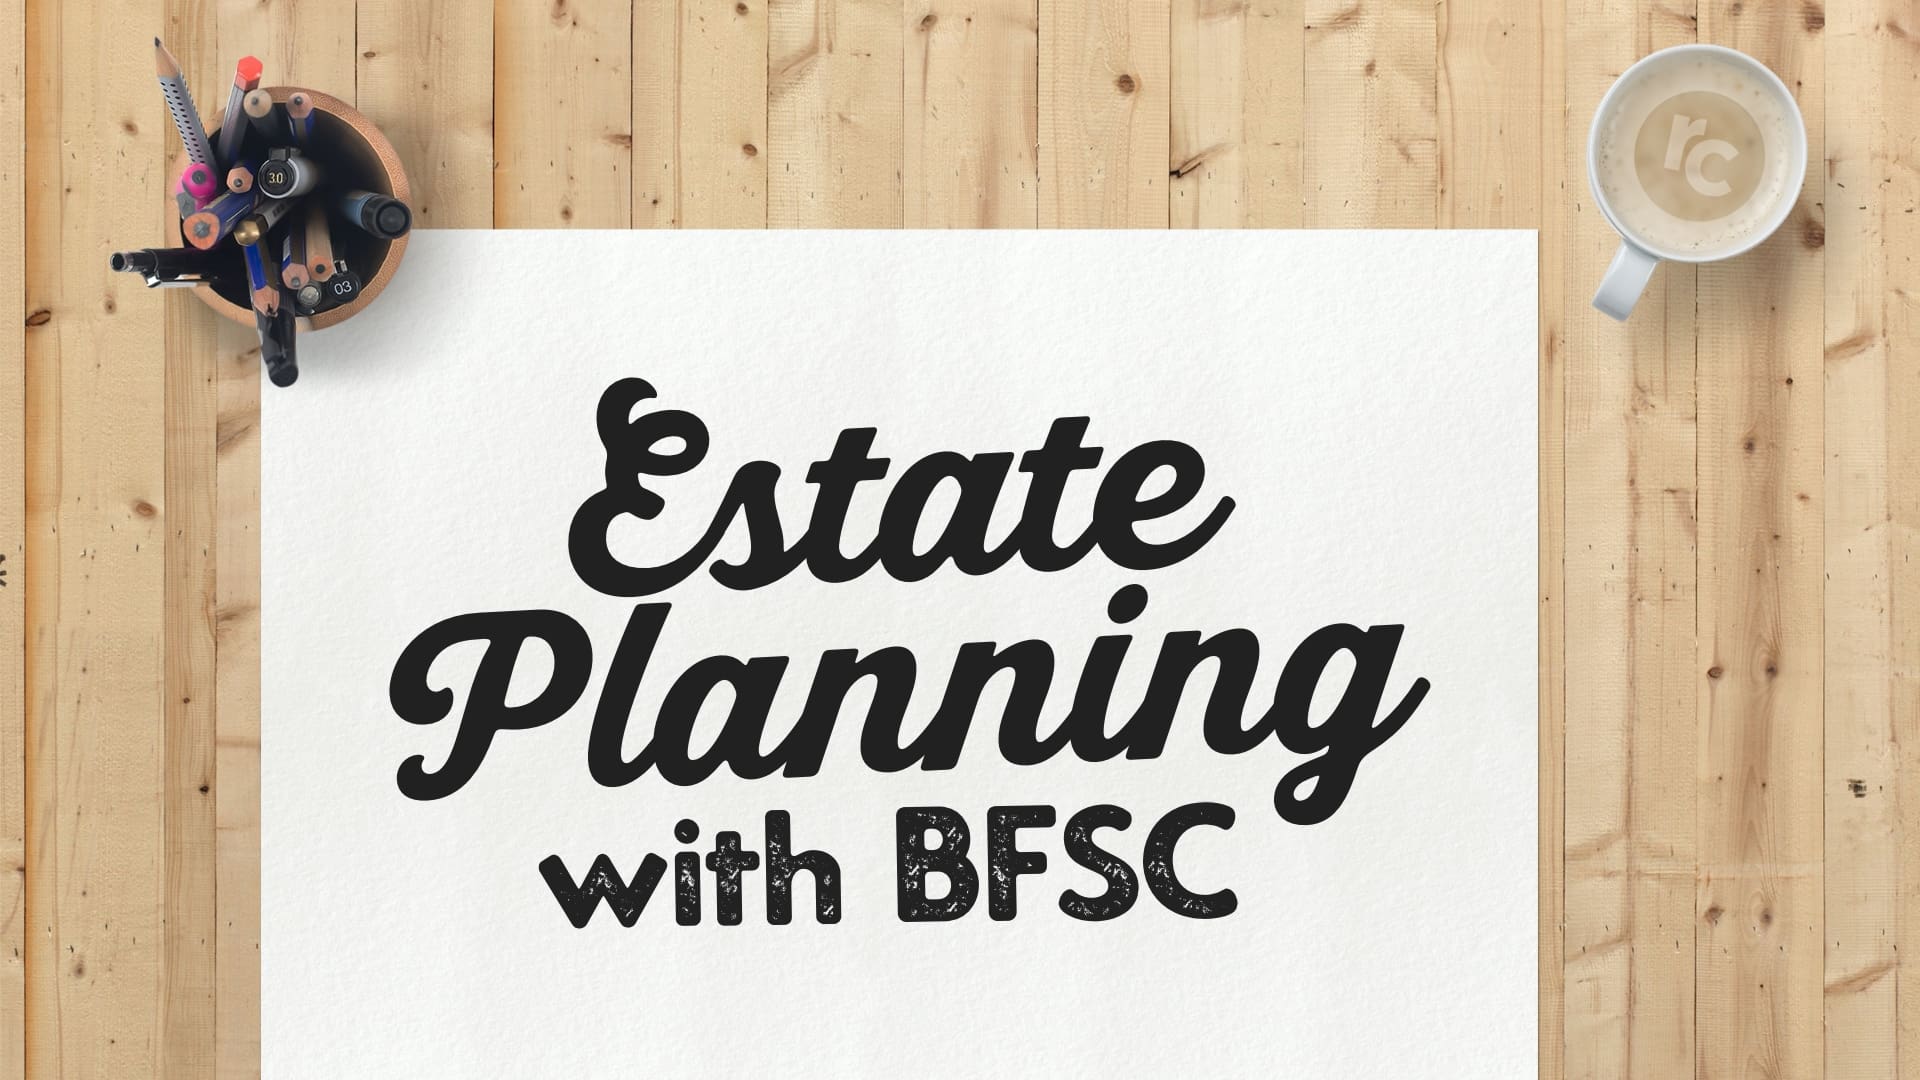 Estate Planning